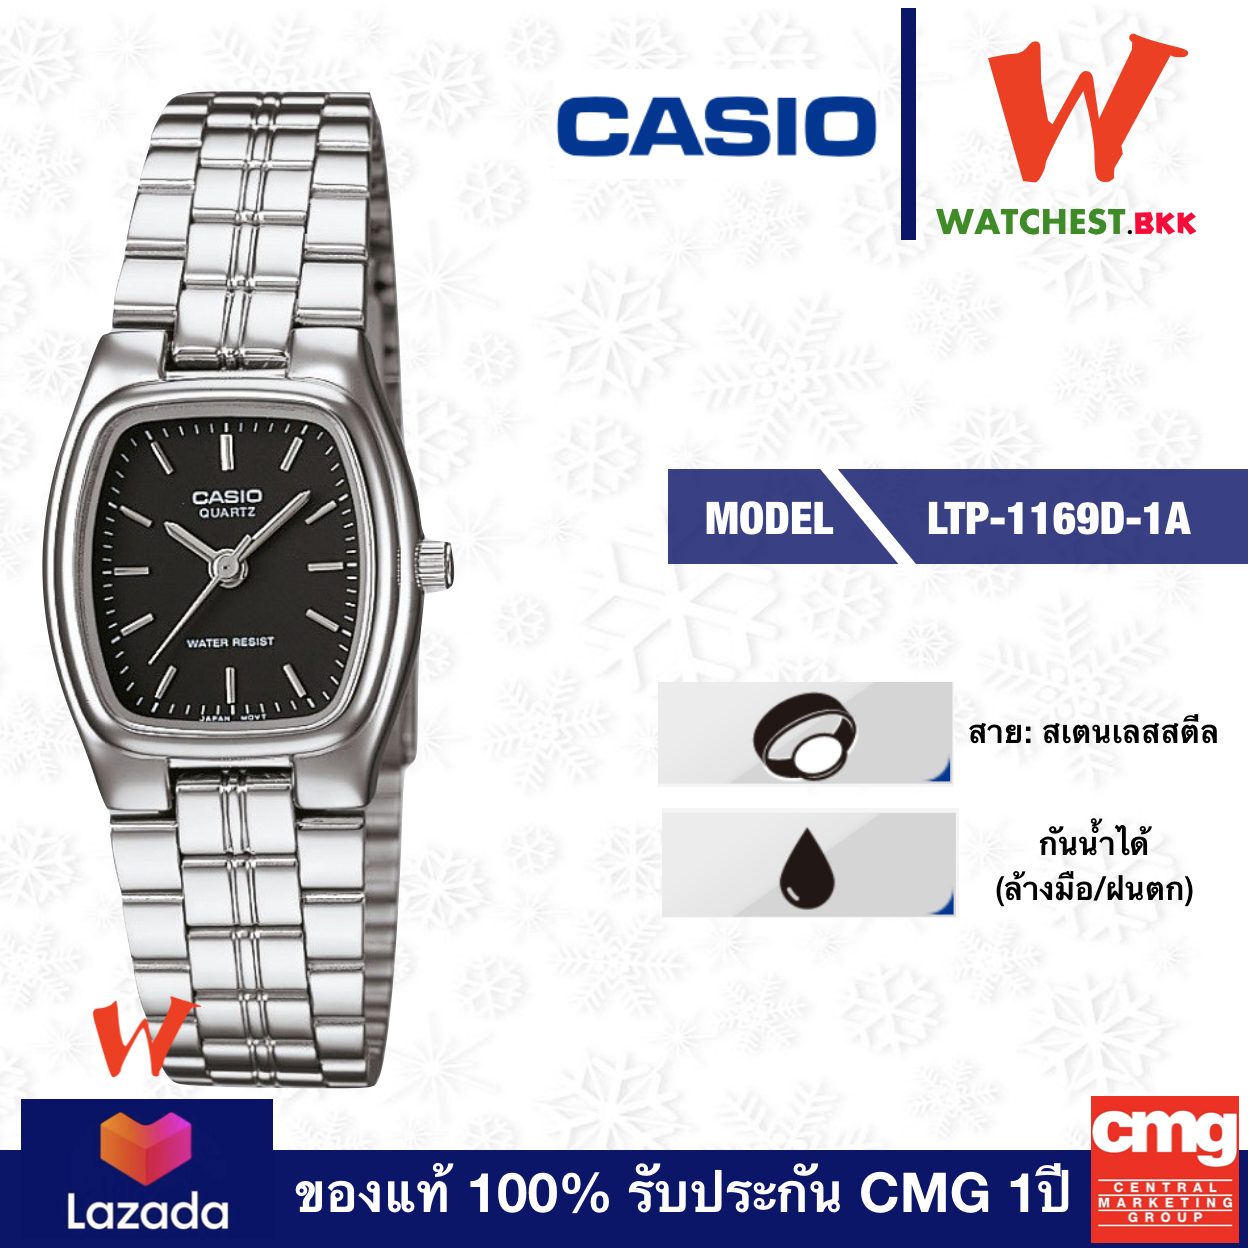 casio นาฬิกาผู้หญิง สายสเตนเลส รุ่น LTP-1169D-1A, คาสิโอ LTP1169, LTP-1169 สายเหล็ก ตัวล็อกบานพับ (watchestbkk คาสิโอ แท้ ของแท้100% ประกัน CMG)